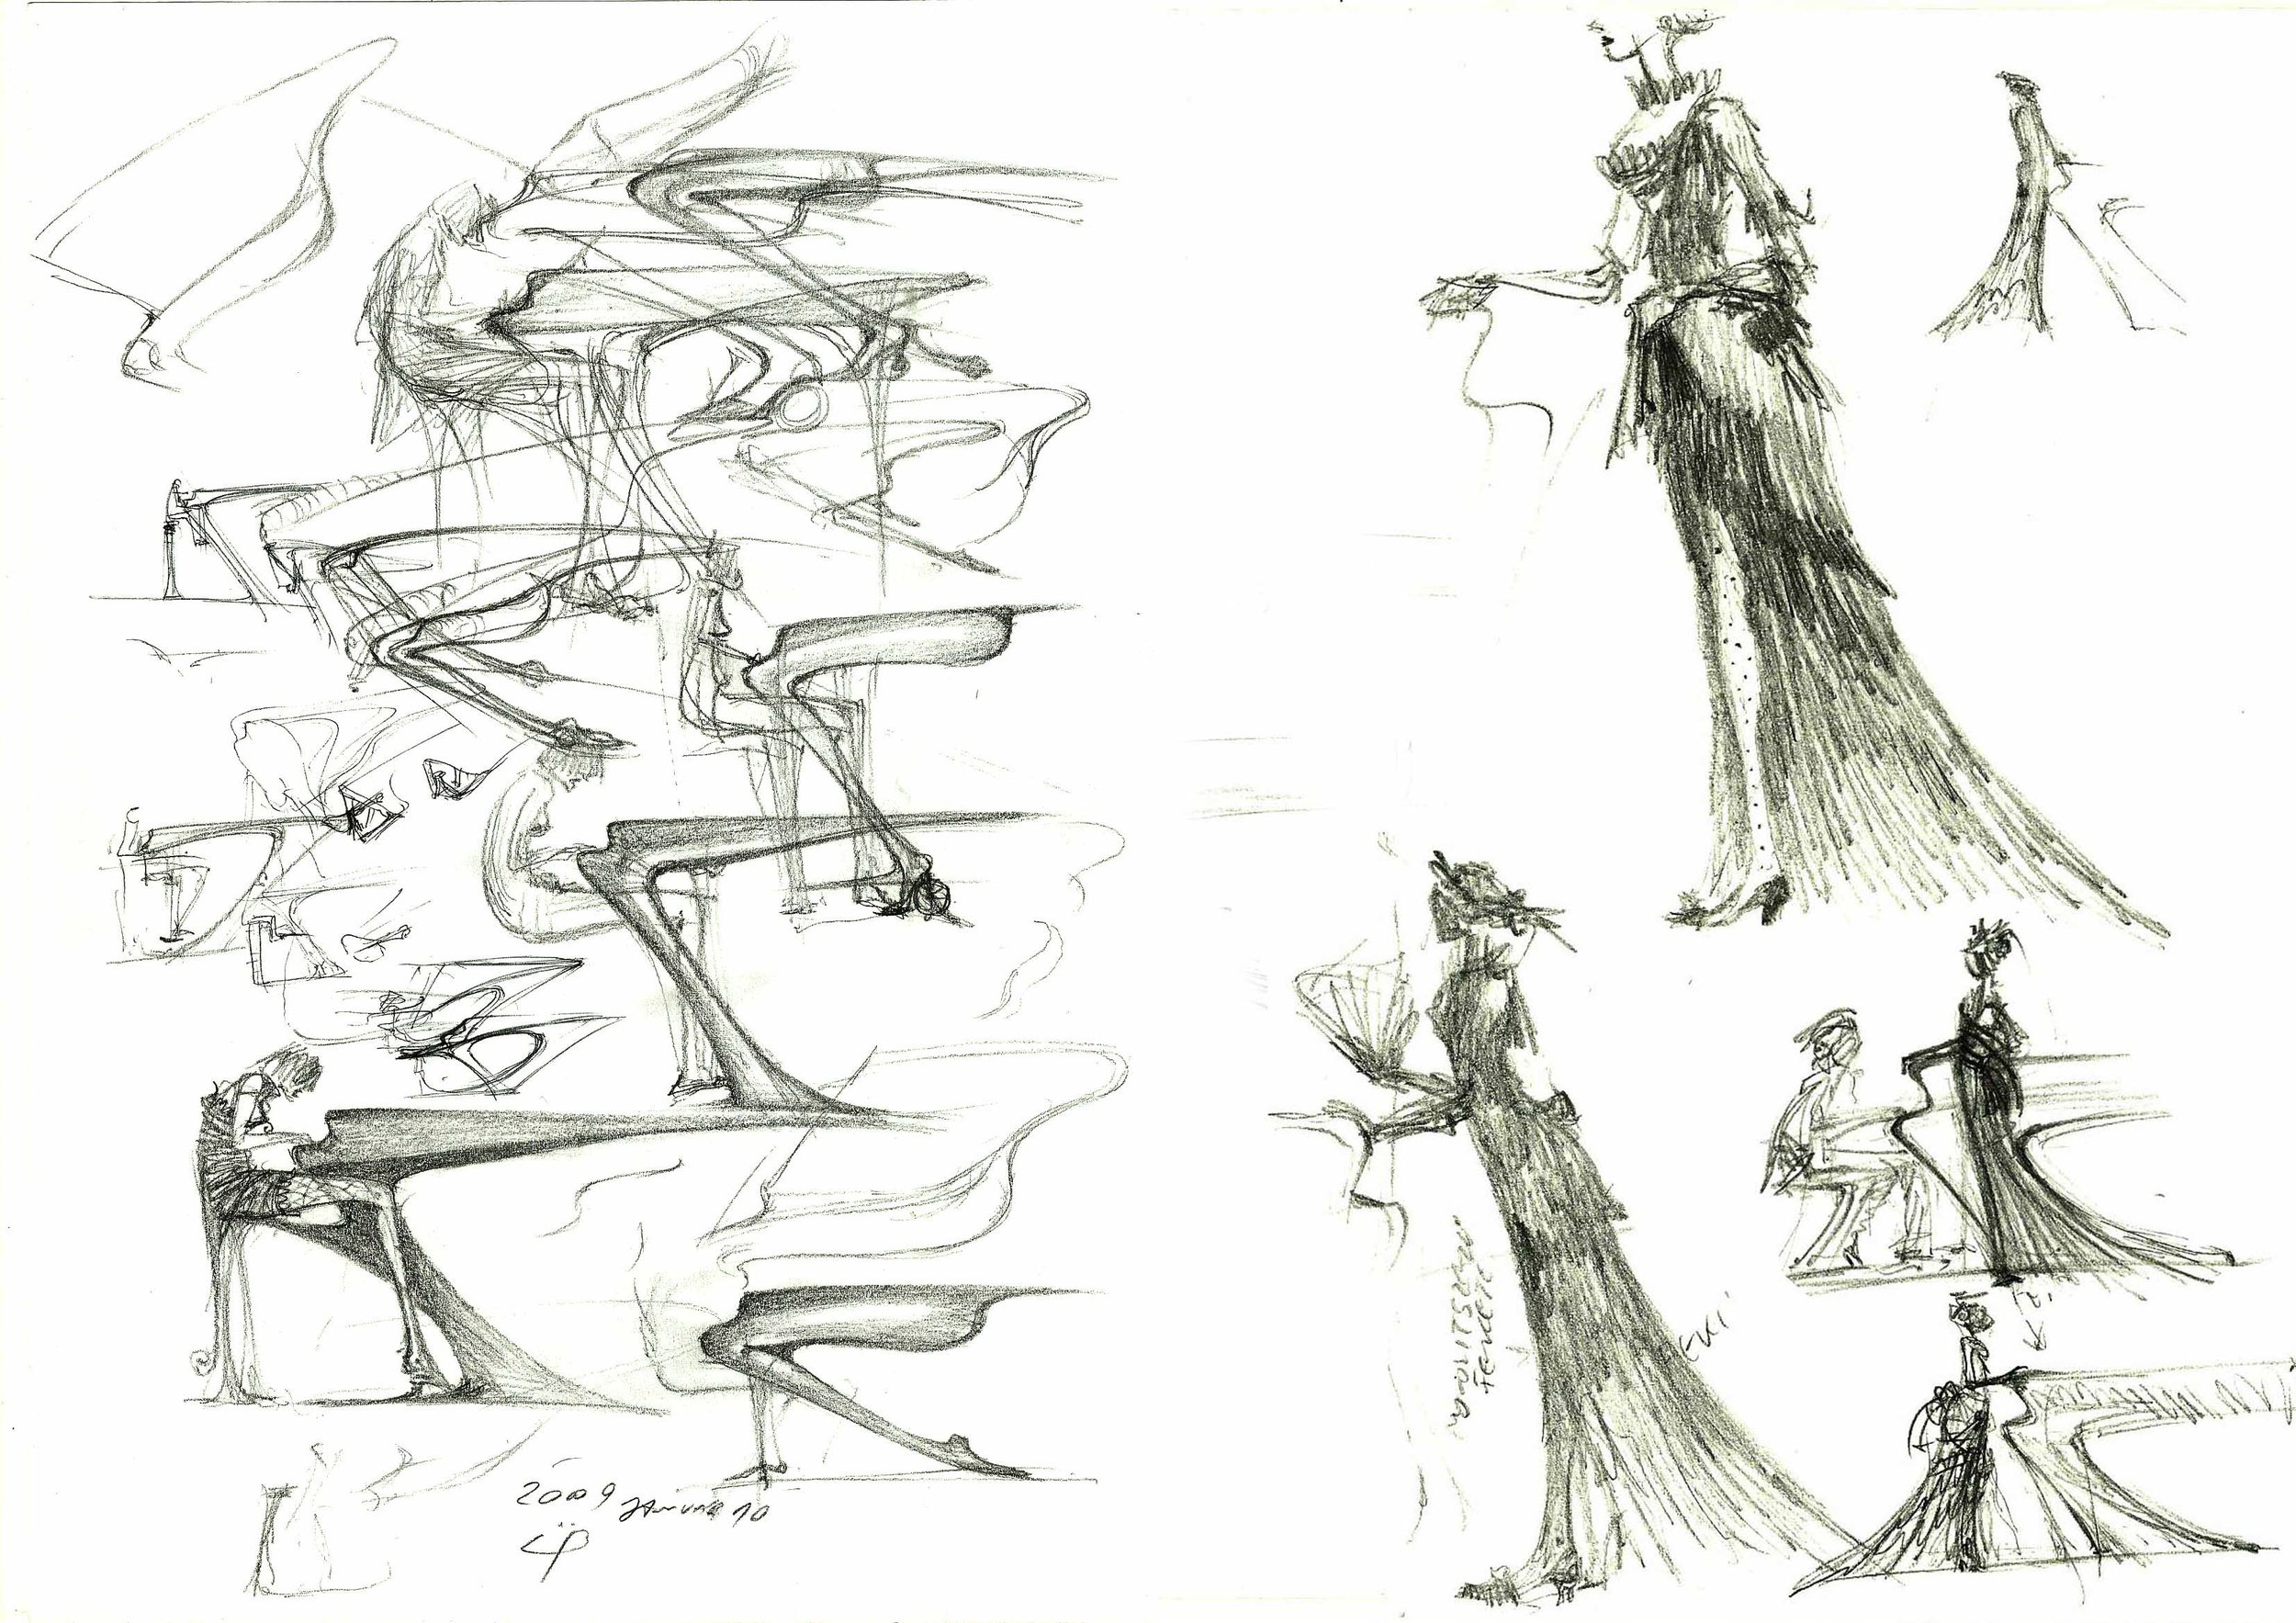 Original sketches by Péter Üveges